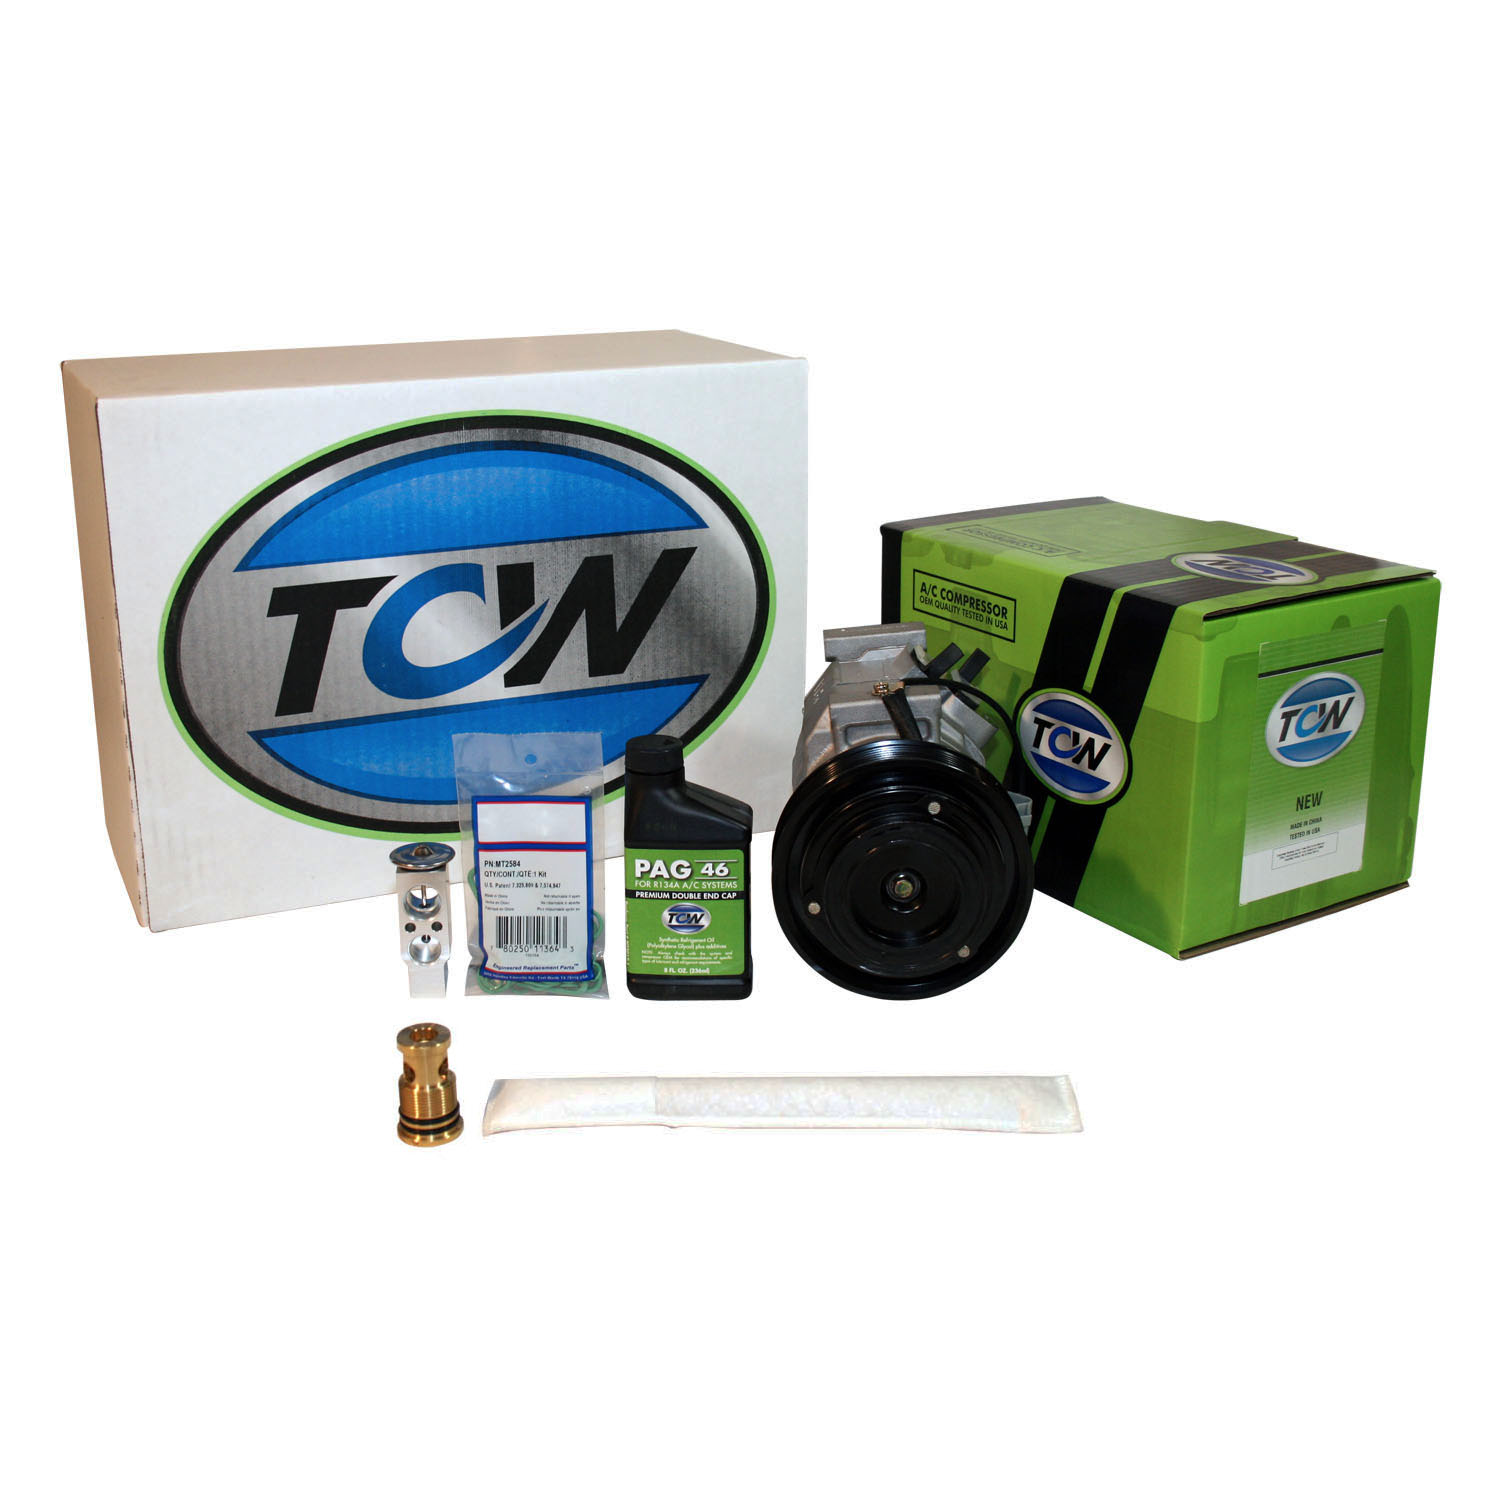 TCW Vehicle A/C Kit K1000388N New Product Image field_60b6a13a6e67c